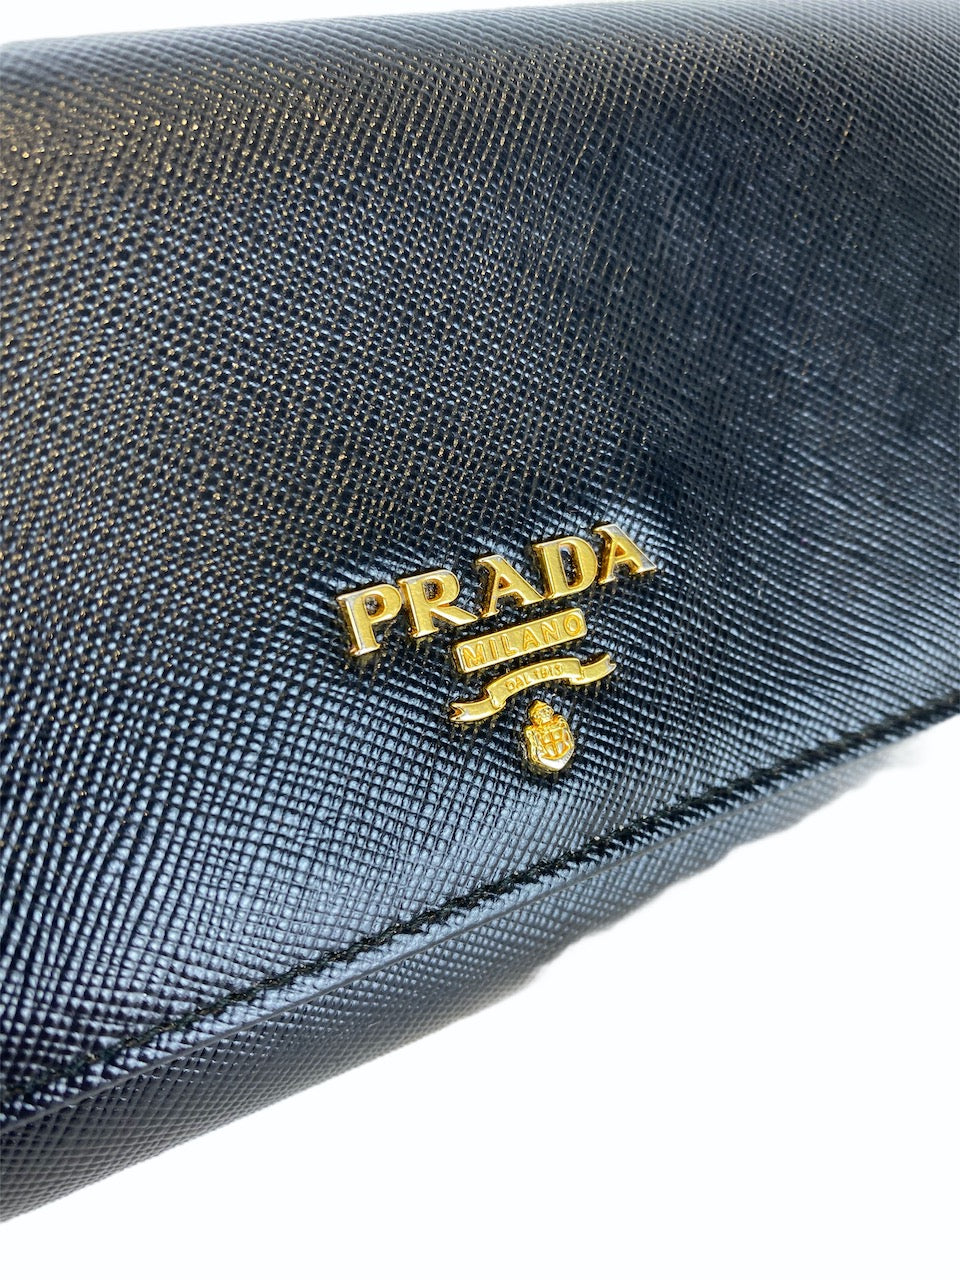 Prada Black Saffiano Leather Continental Wallet - As Seen on Instagram 2/9/20 - Siopaella Designer Exchange